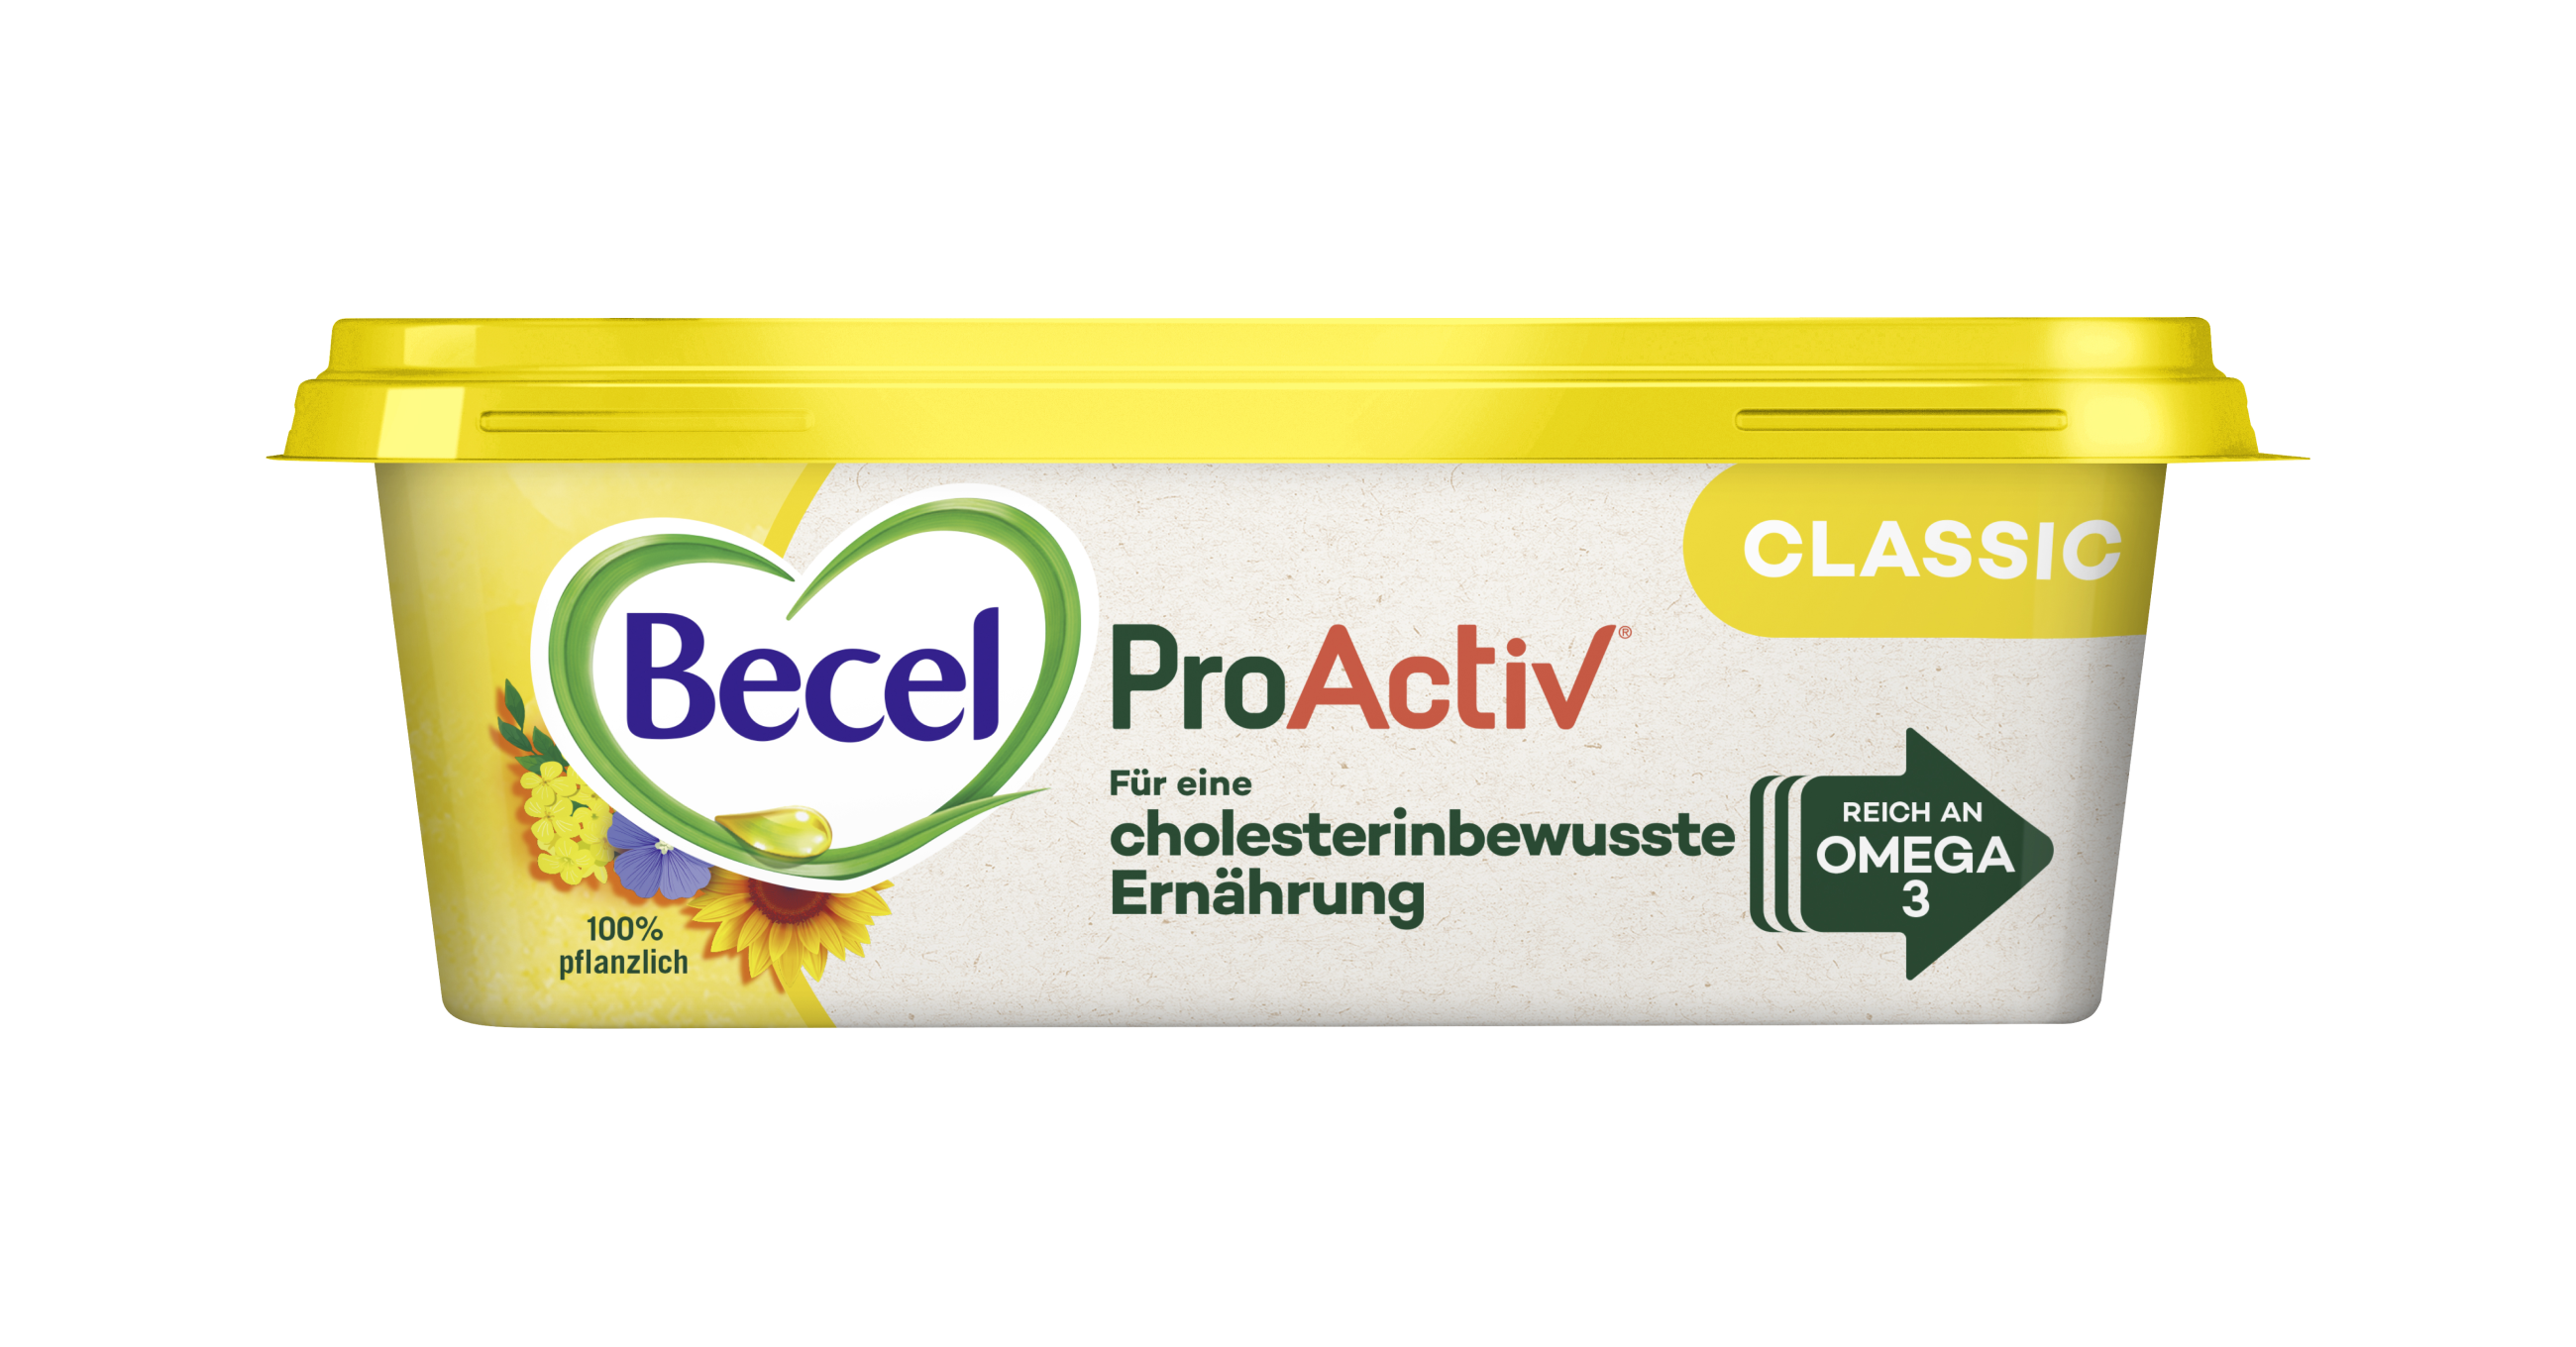 Becel ProActiv Classic